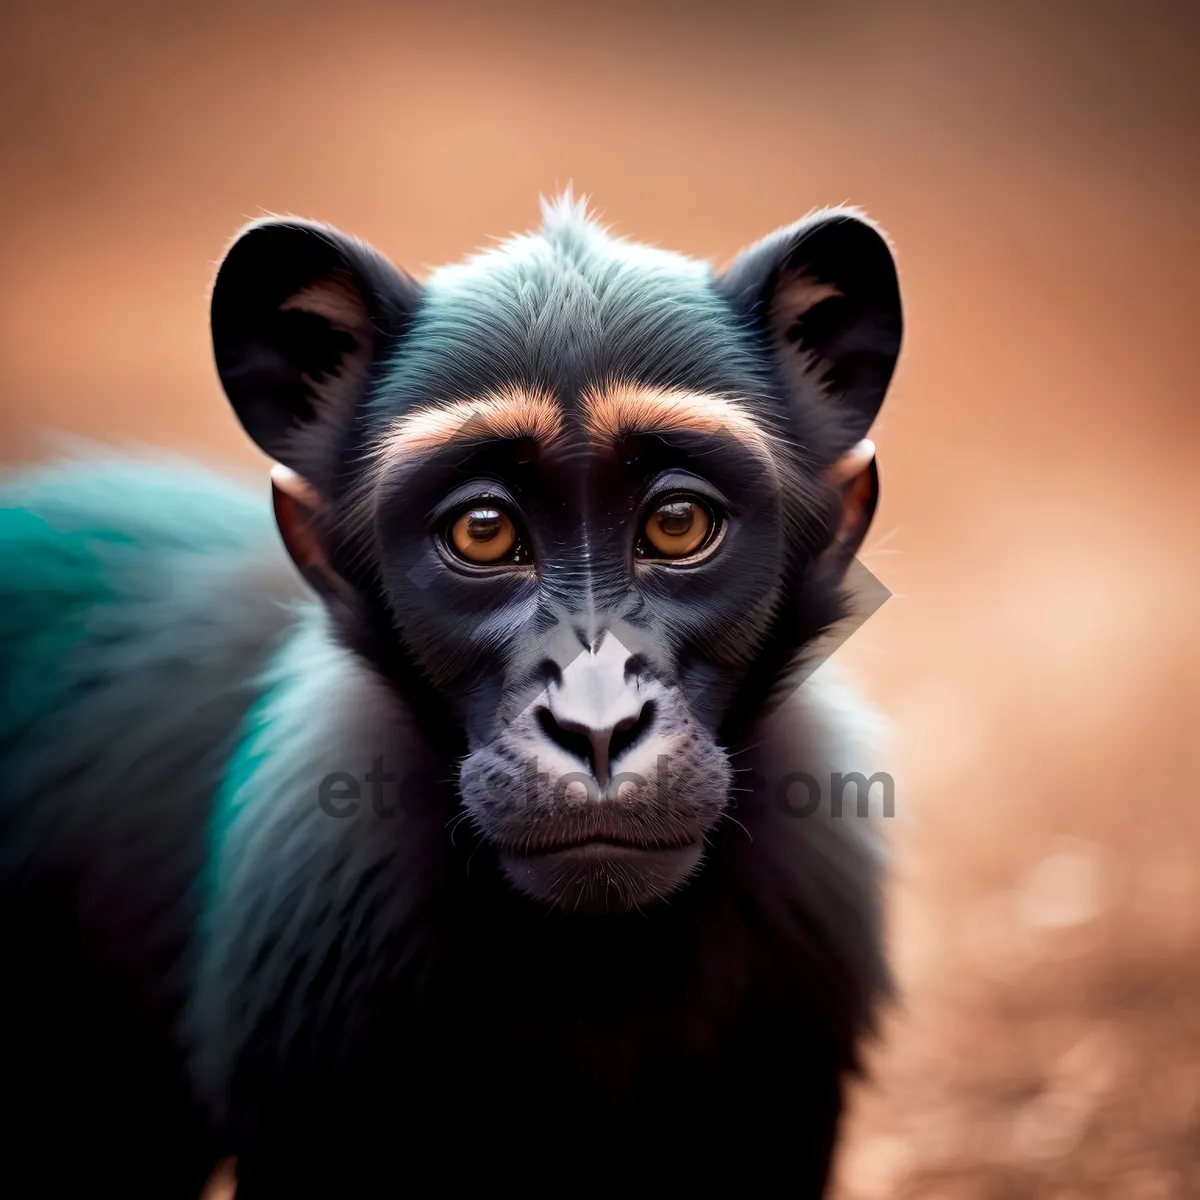 Picture of Wild Primate Baby in Jungle Habitat